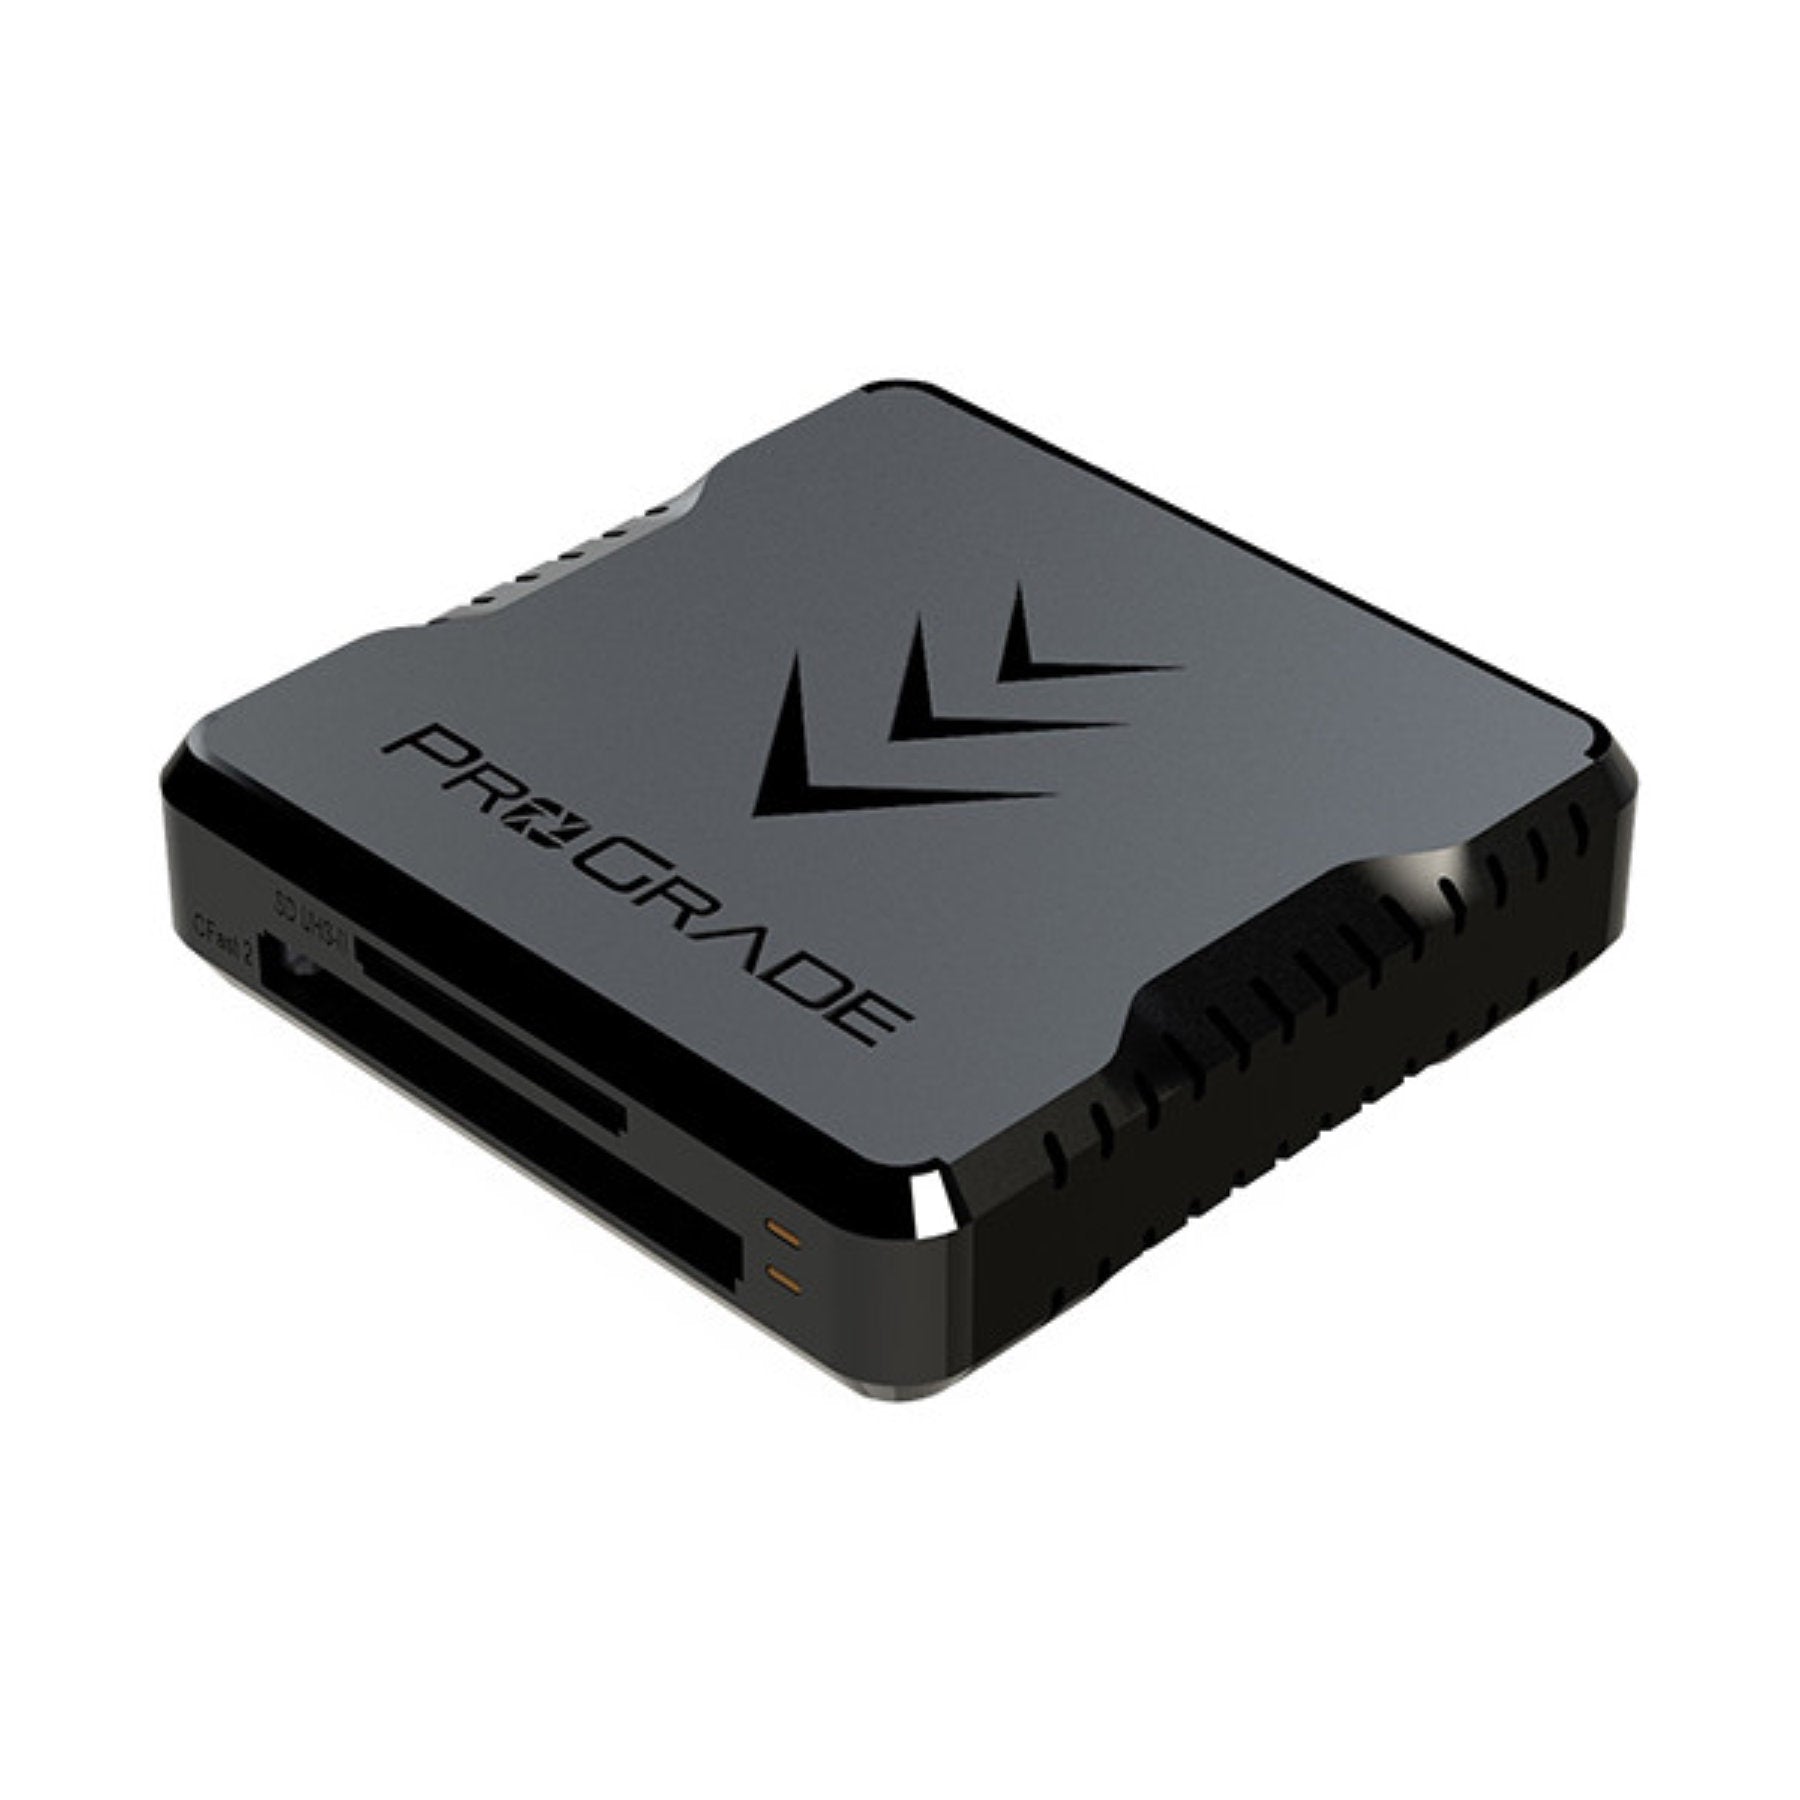 Buy ProGrade Digital Dual-Slot CFast 2.0 & UHS-II SDXC USB 3.1 Gen 2 Type-C Card Reader at Topic Store